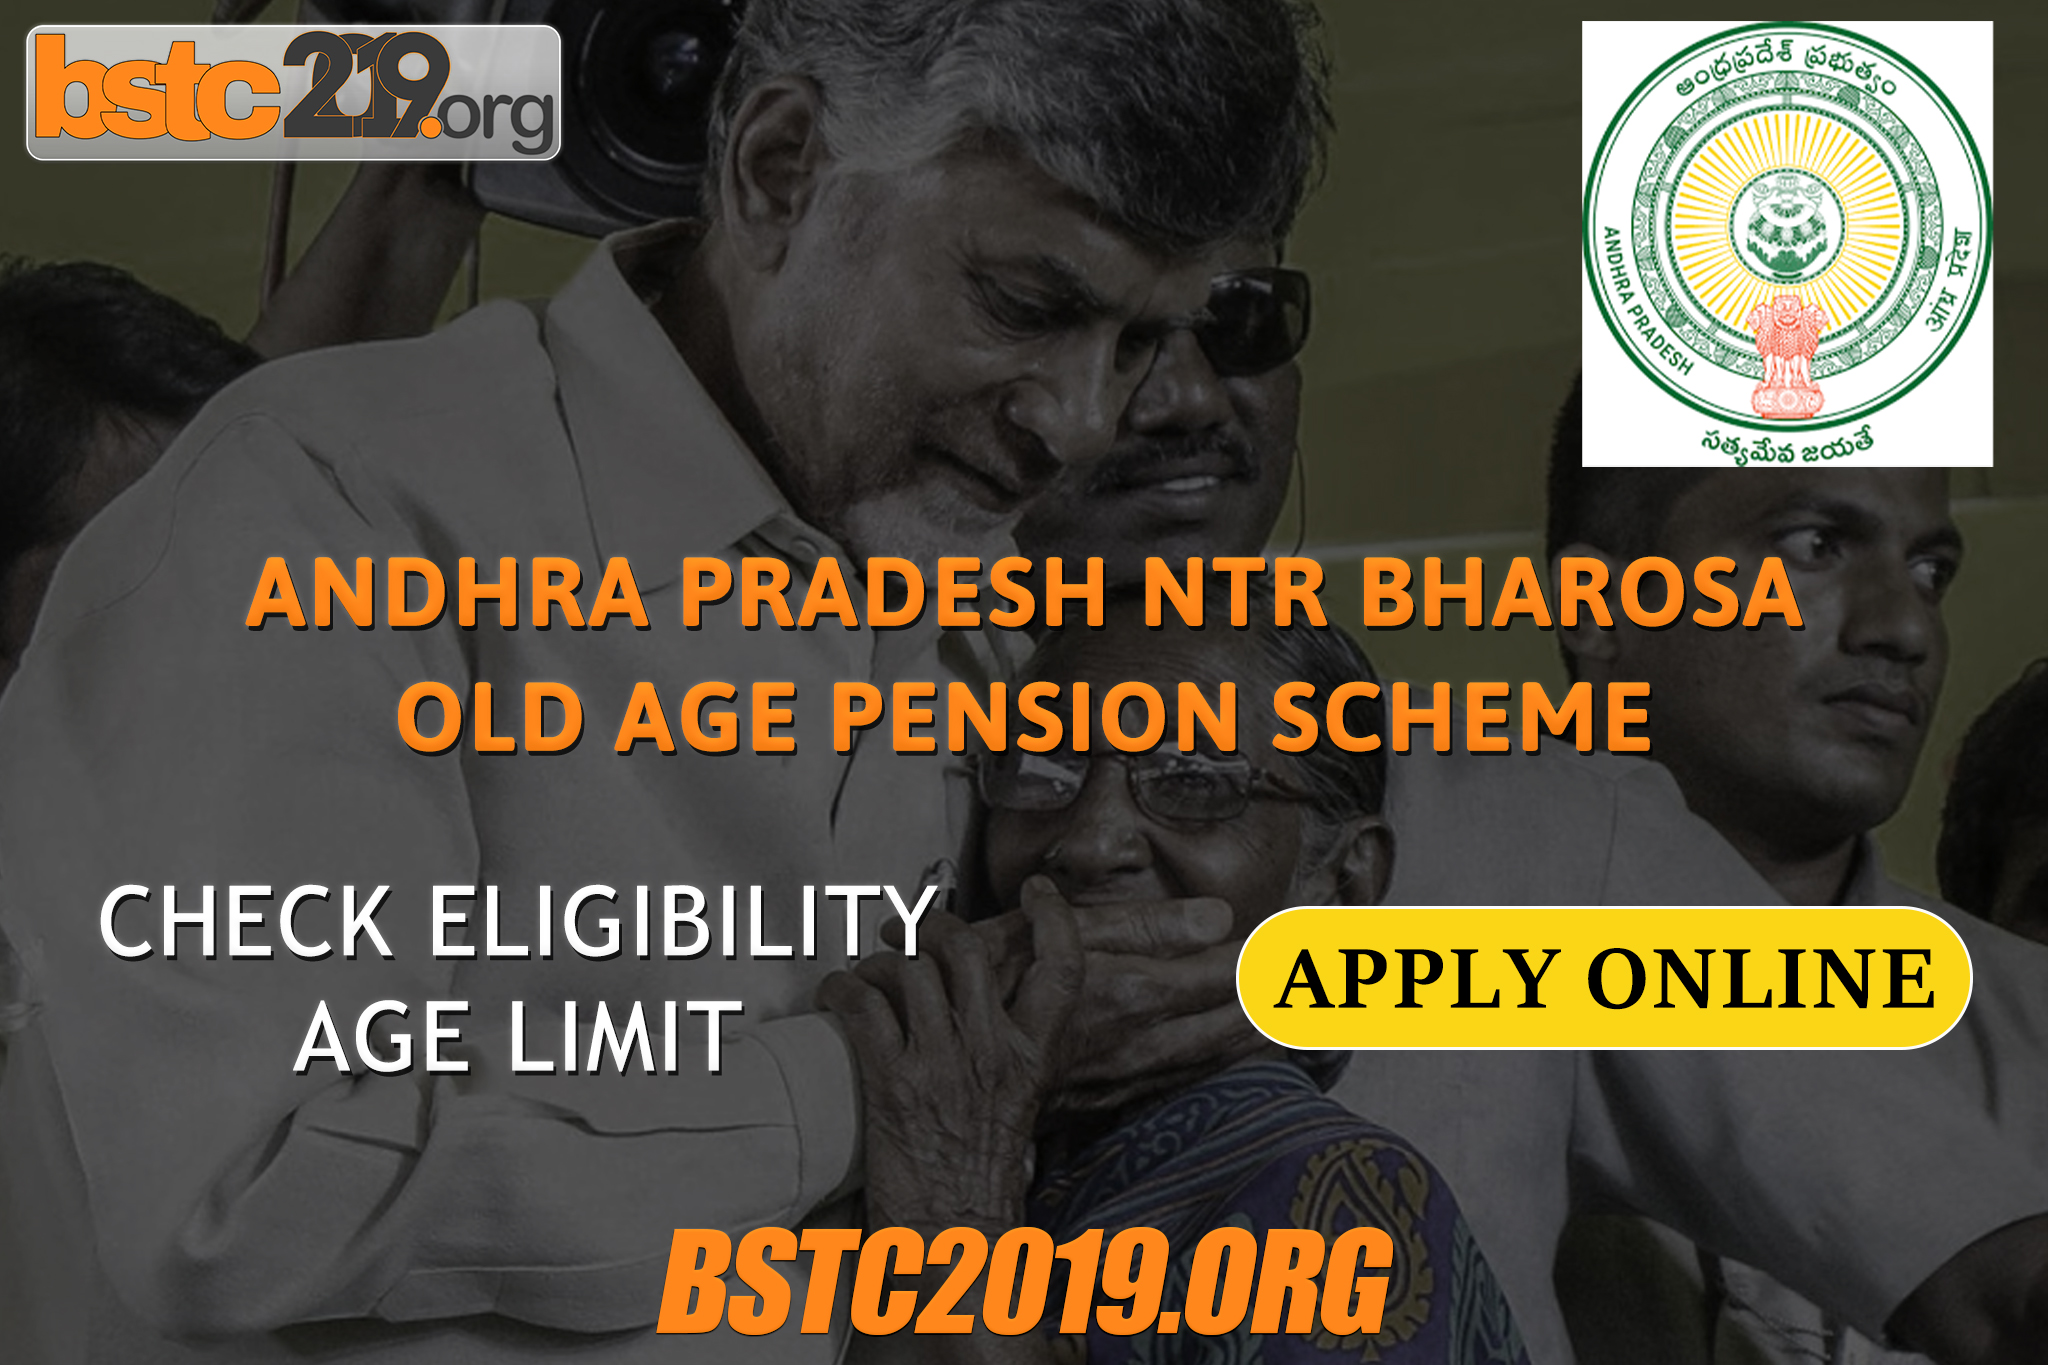 NTR Bharosa Old Age Pension